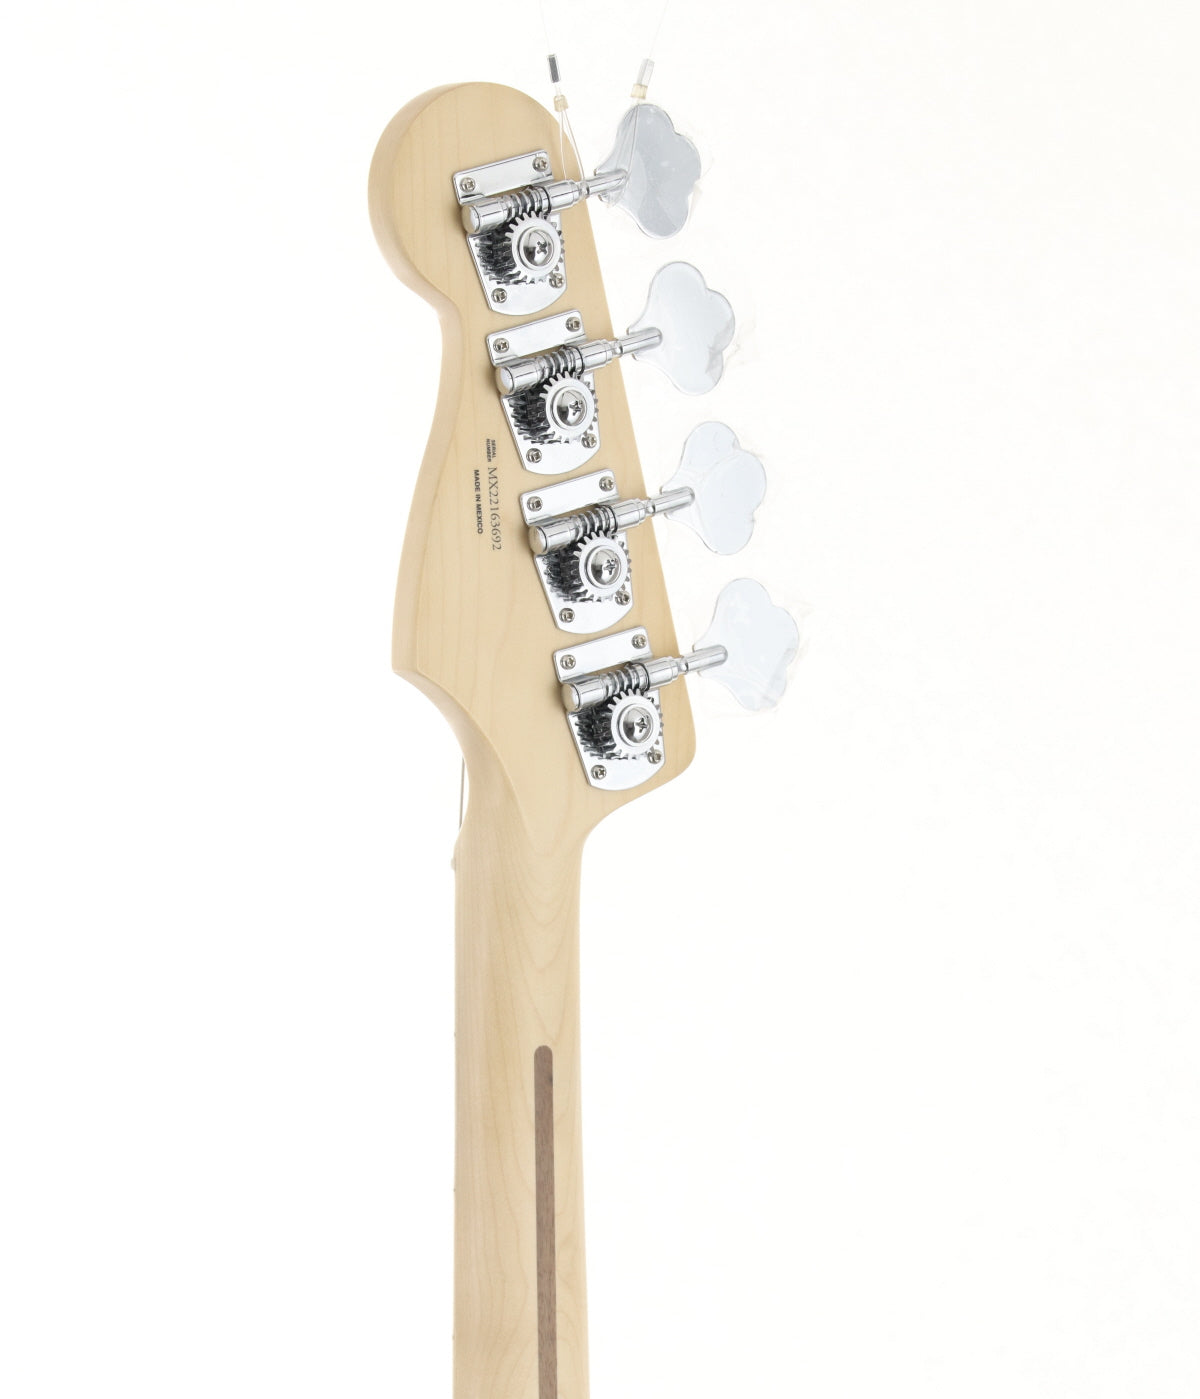 USED FENDER / Player Series Jazz Bass Black Maple [08]